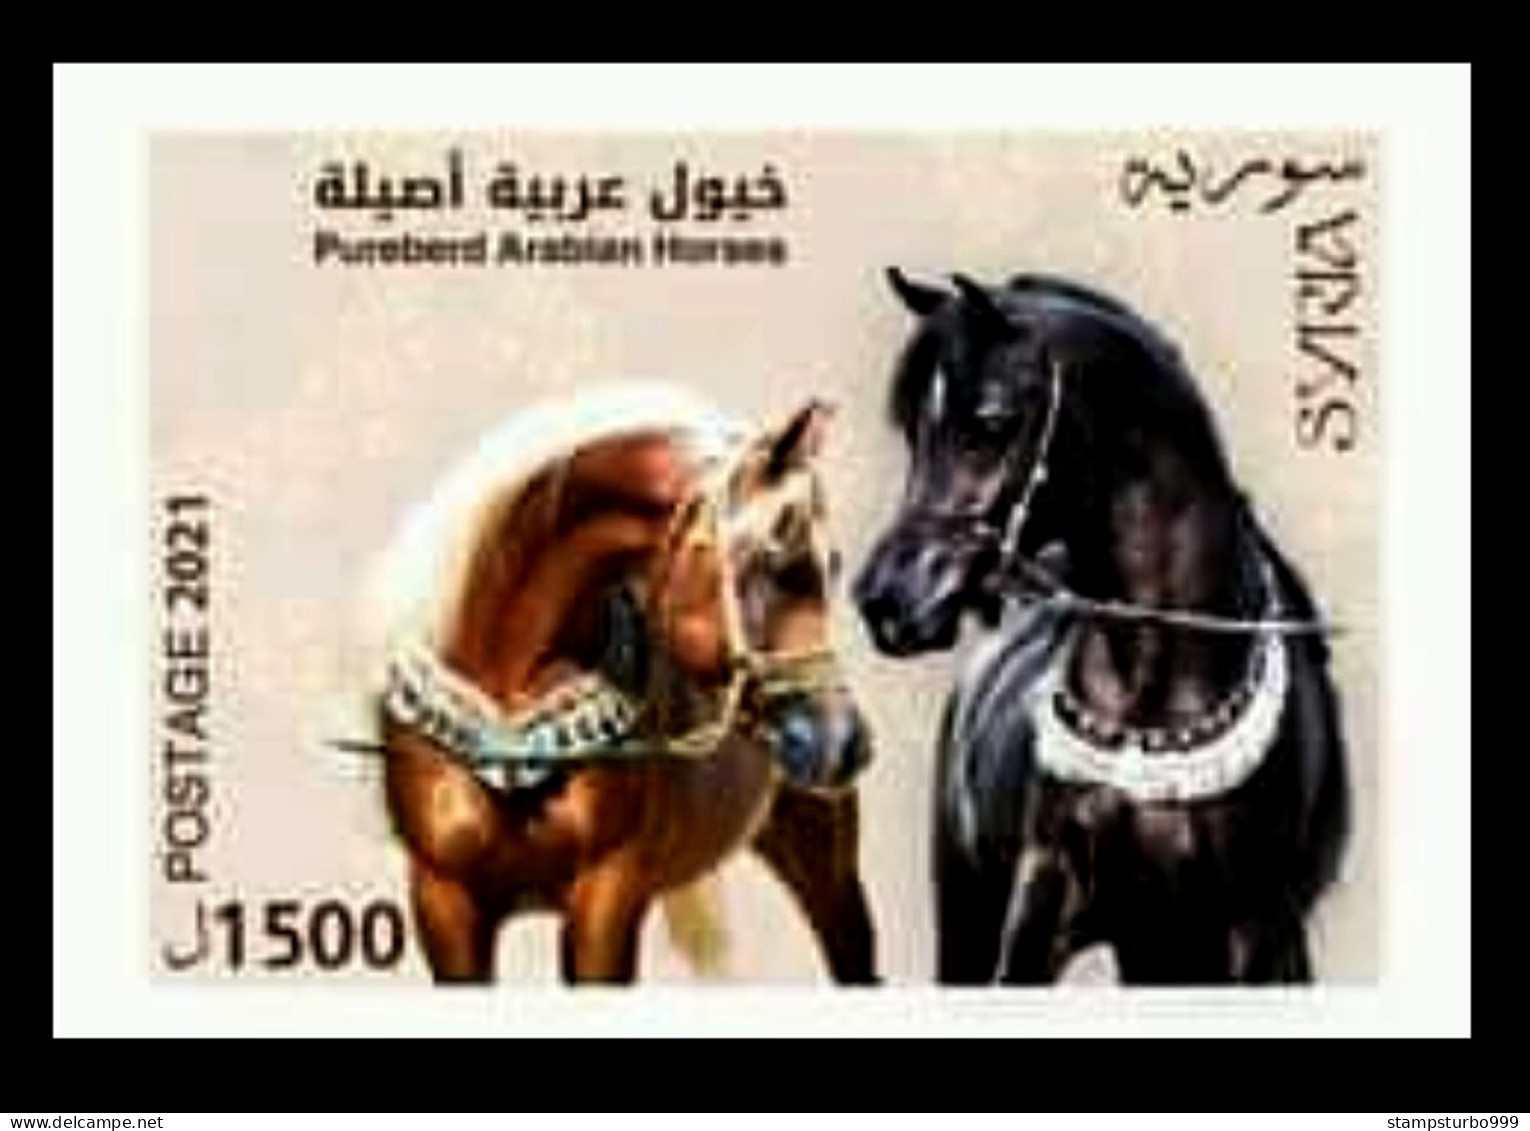 Syrie, Syrien , Syria, 2021 , Arab Horses, Block, Luxe, Sans Charniere ,xx ,MNH ** - Syria